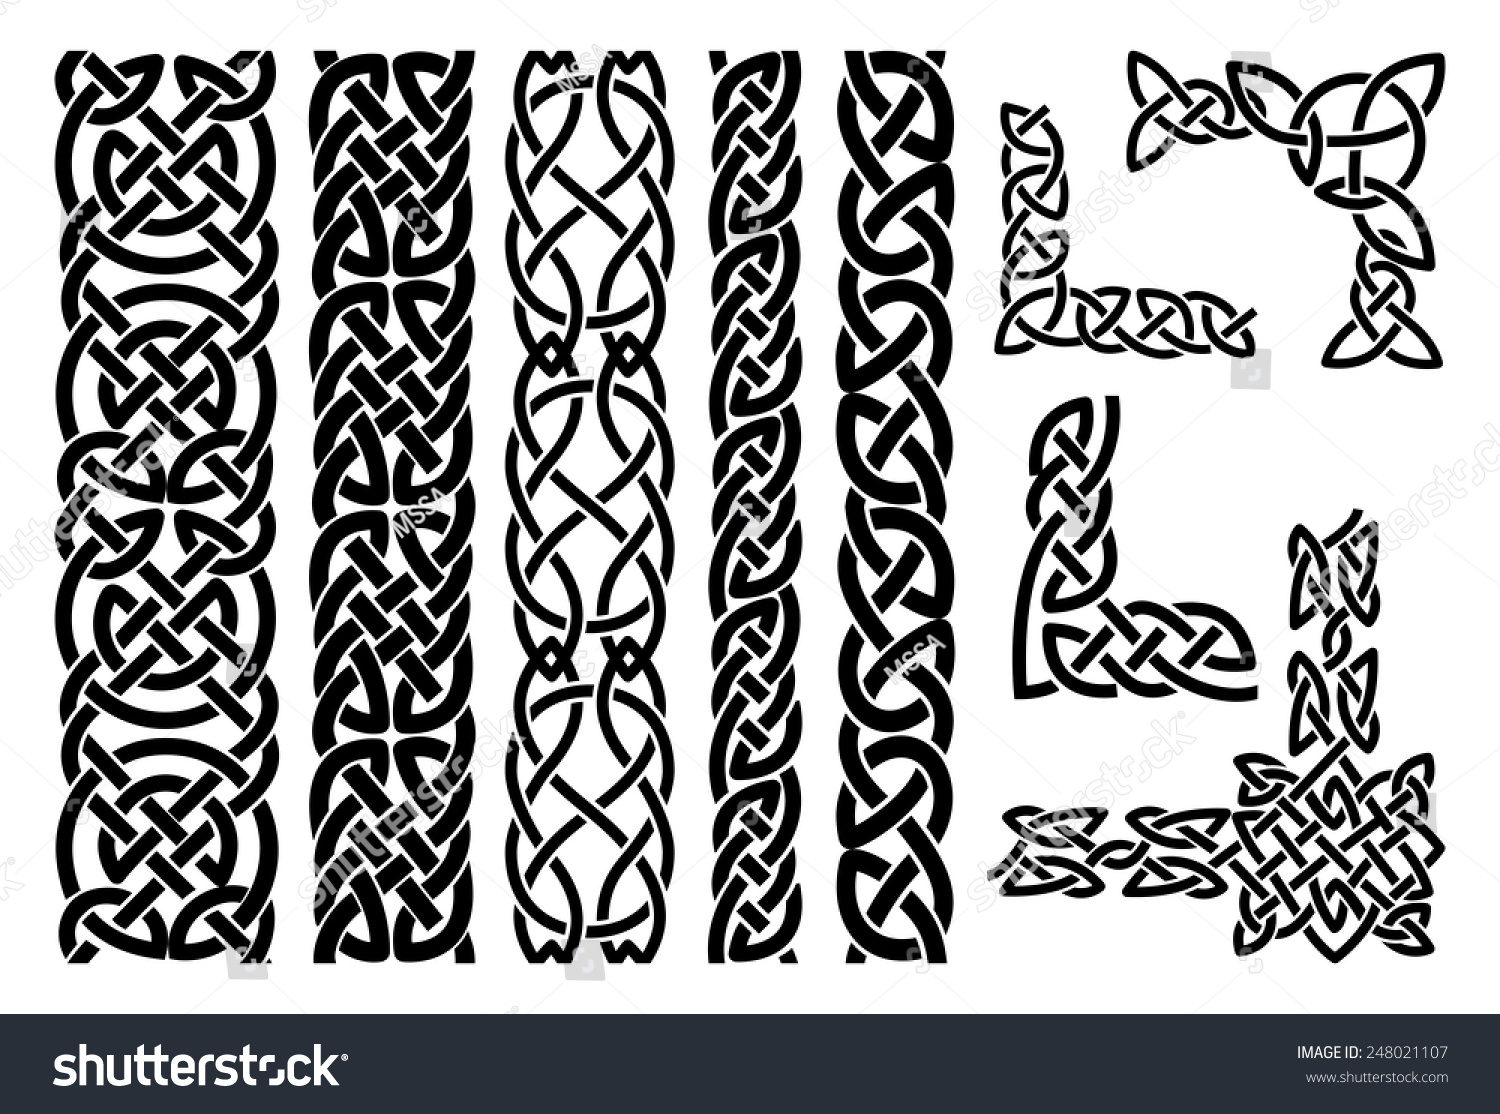 http://image.shutterstock.com/z/stock-vector-set-of-celtic-patterns-and-celtic-ornament-corners-in-black-vector-illustration-248021107.jpg